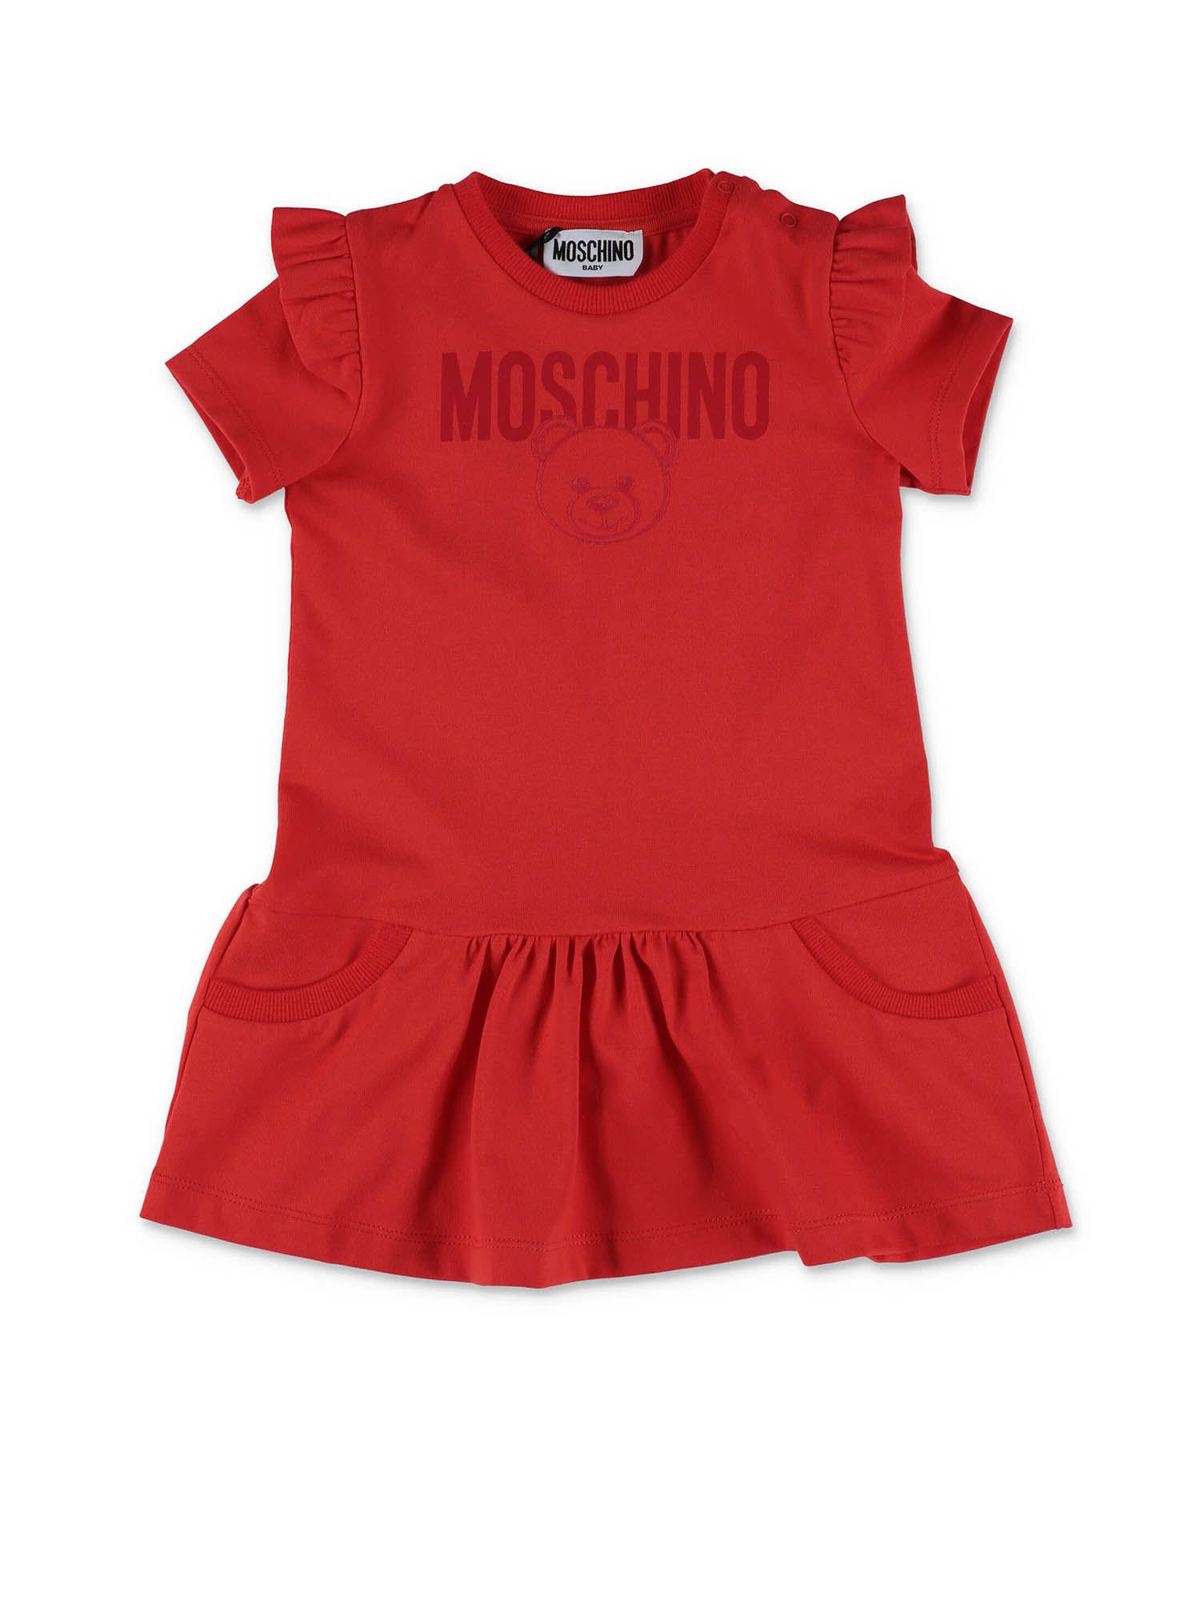 MOSCHINO RUFFLES DRESS IN RED